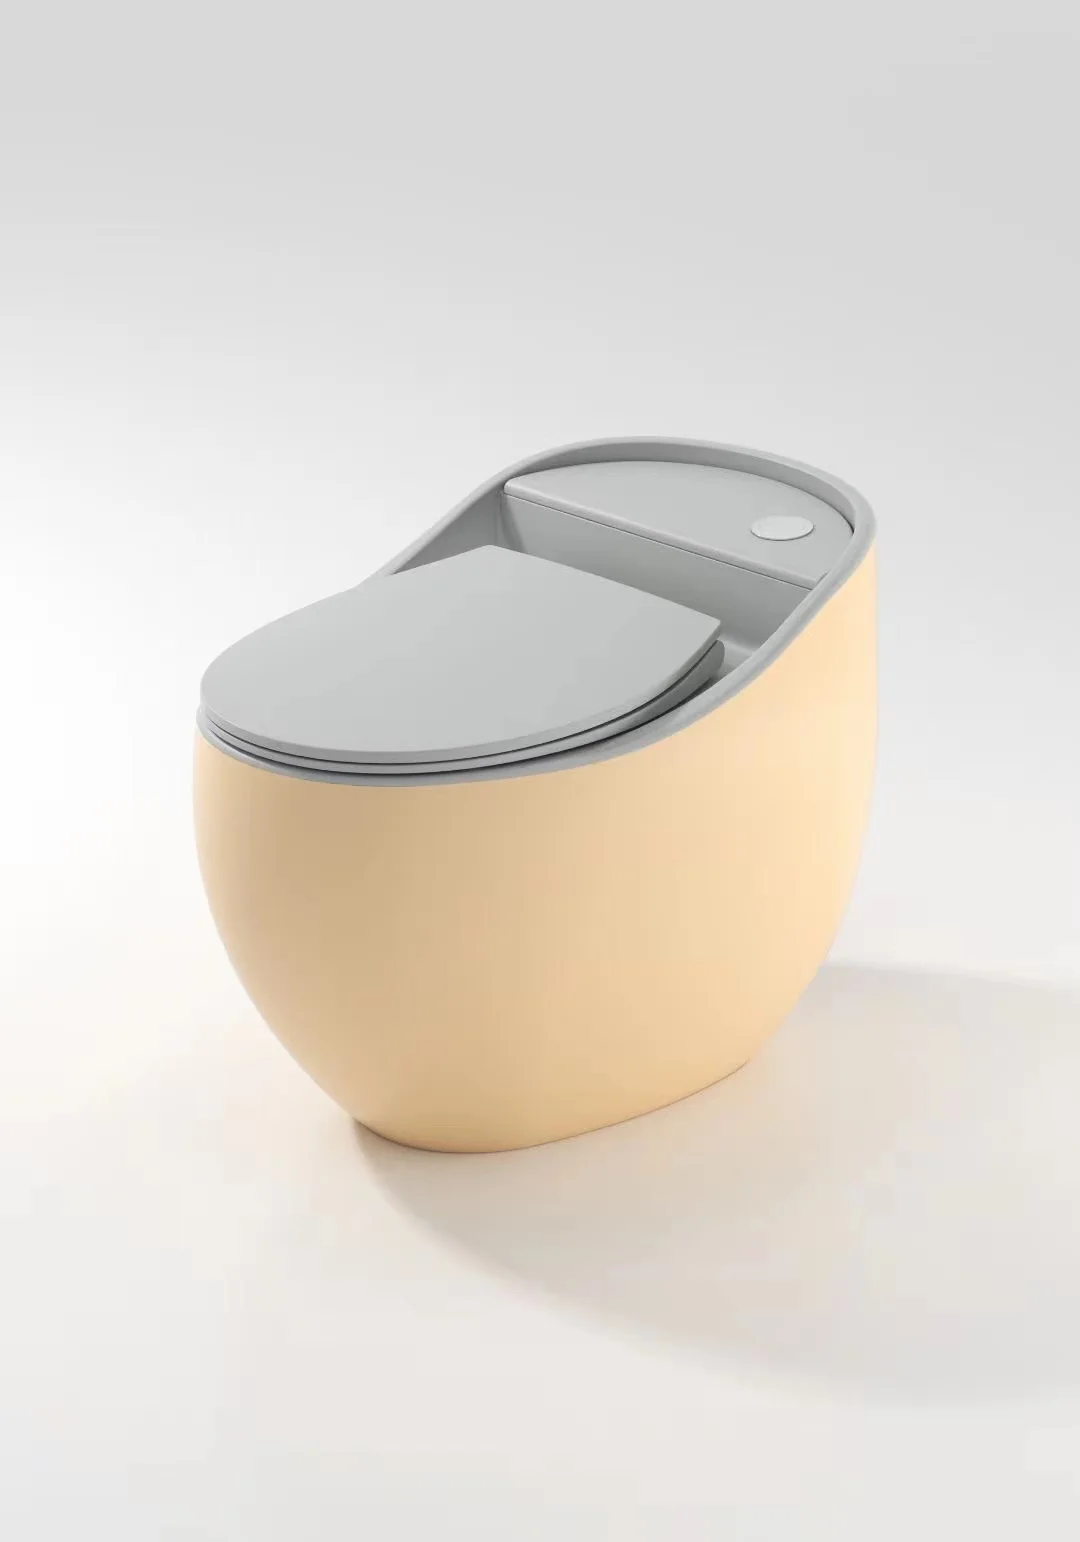 Luxury Modern Design Bathroom Ceramic Egg Shaped Toilets One Piece Ceramic Toilet Bowl